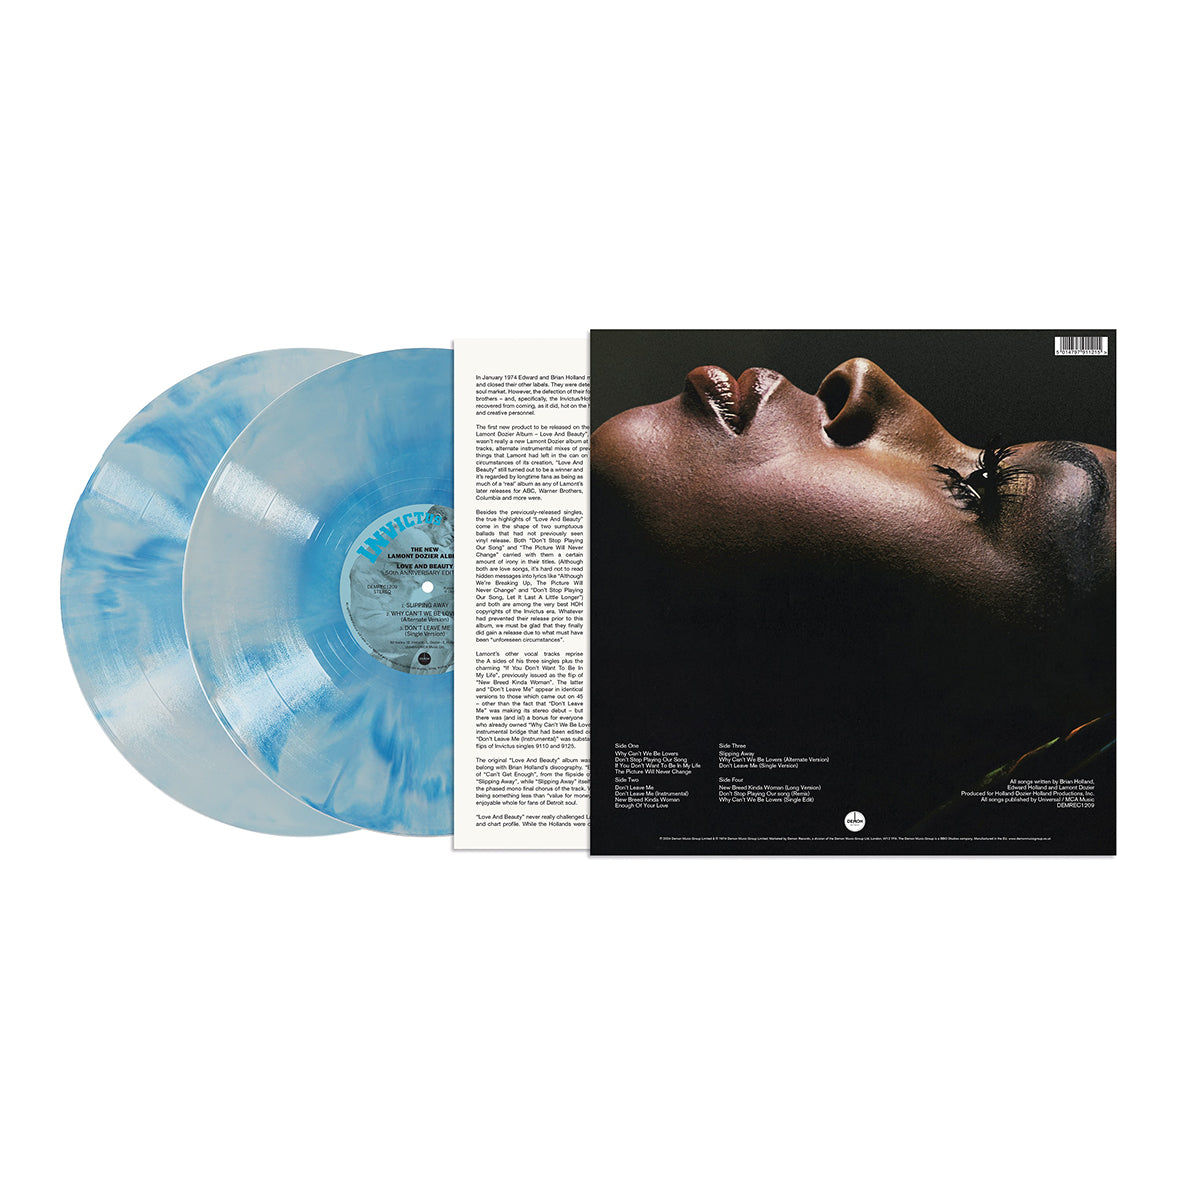 Lamont Dozier - The New Lamont Dozier Album - Love and Beauty (50th Anniversary): Blue Marble Vinyl 2LP [RSD24]